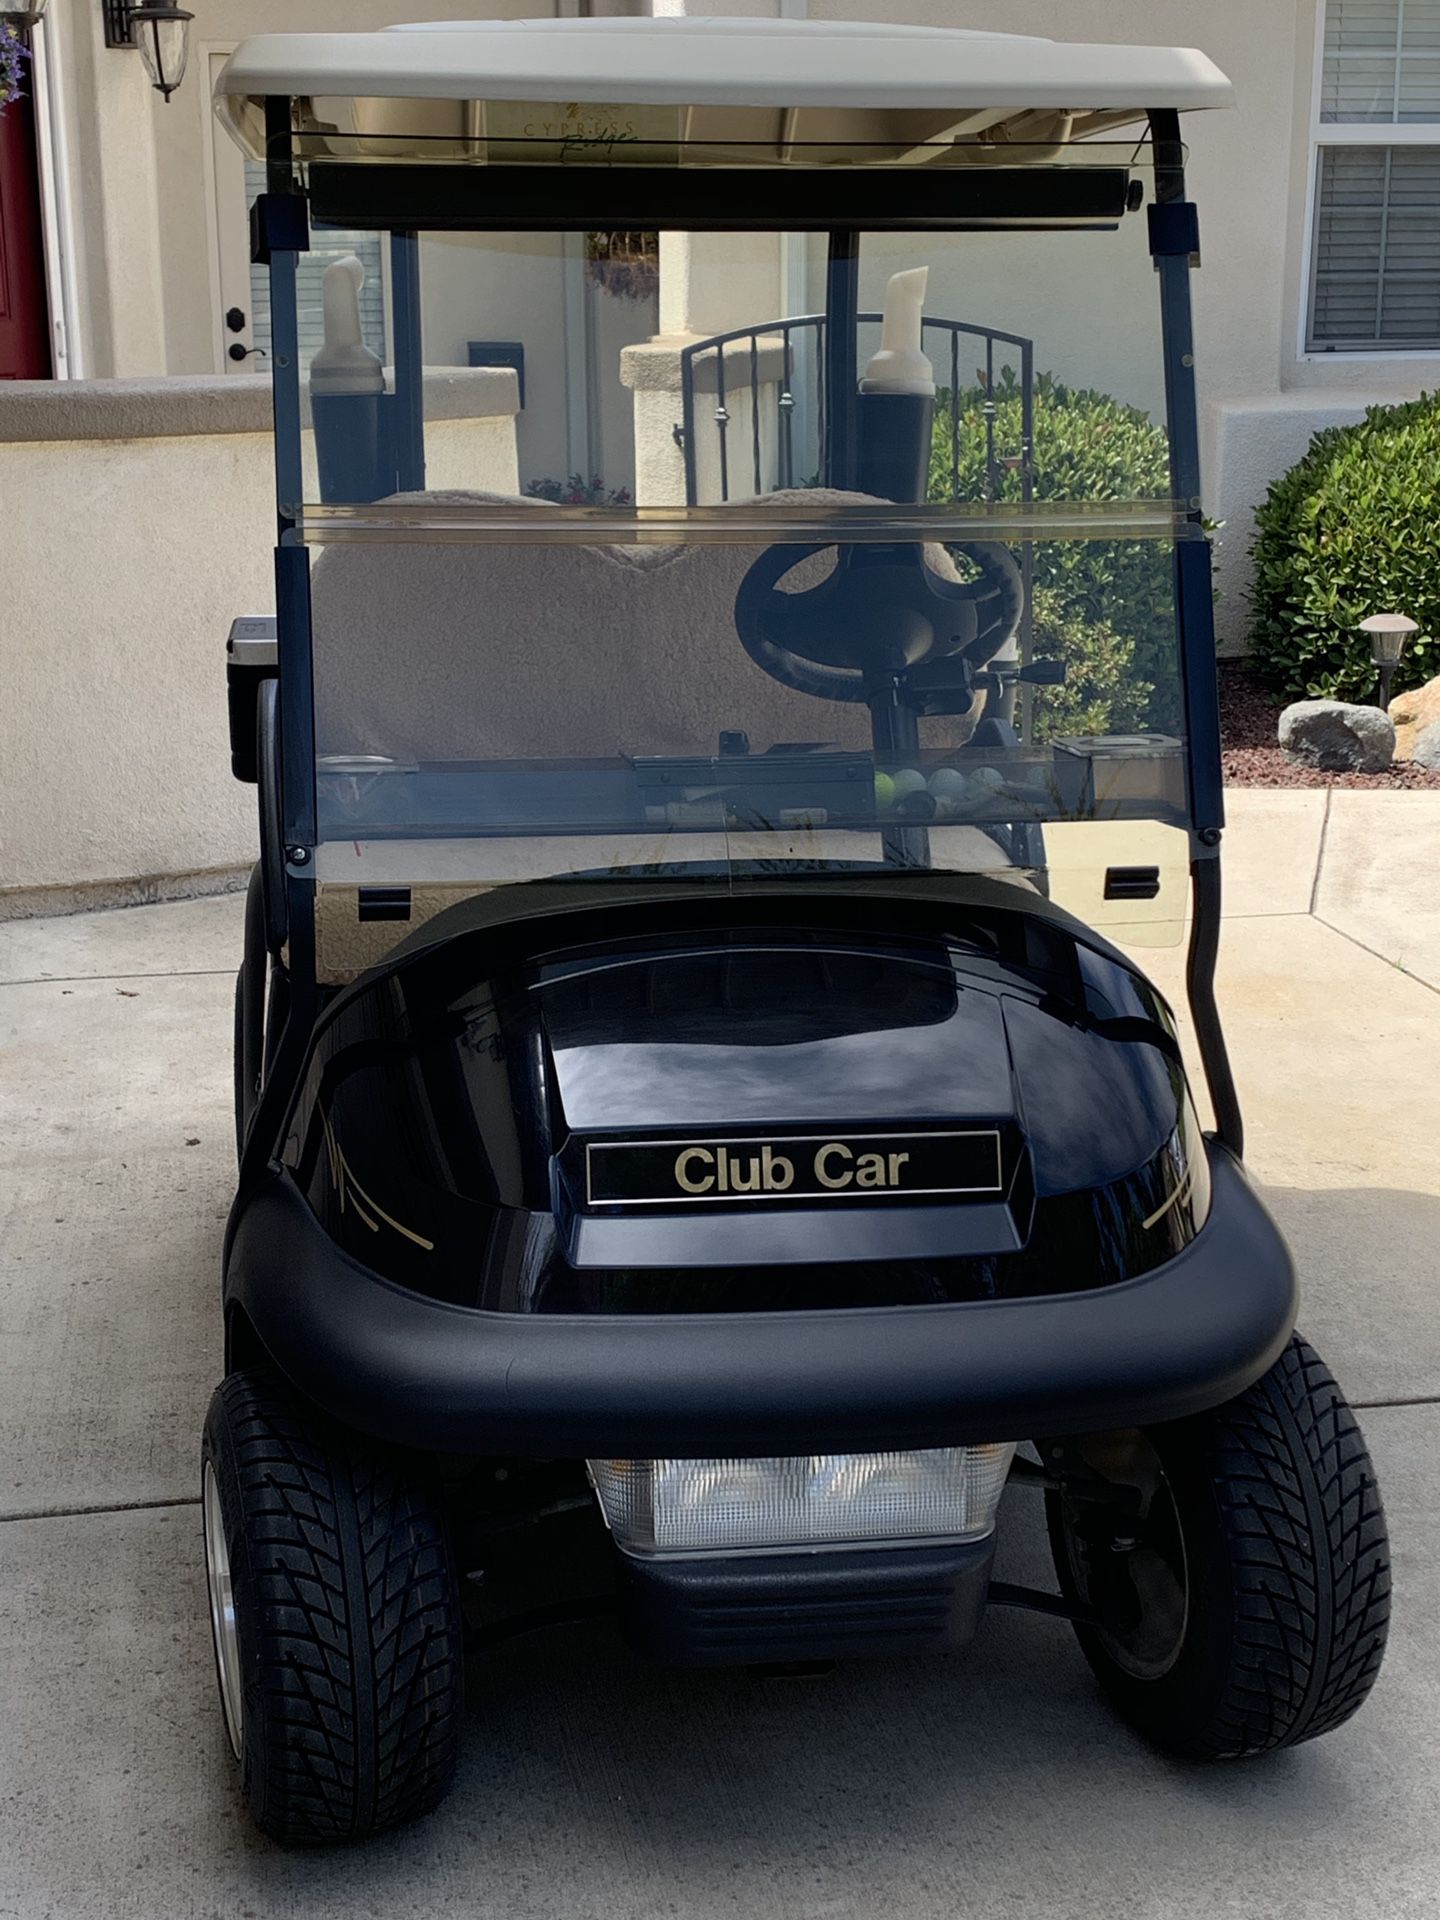 Club Car Precedent Golf Cart